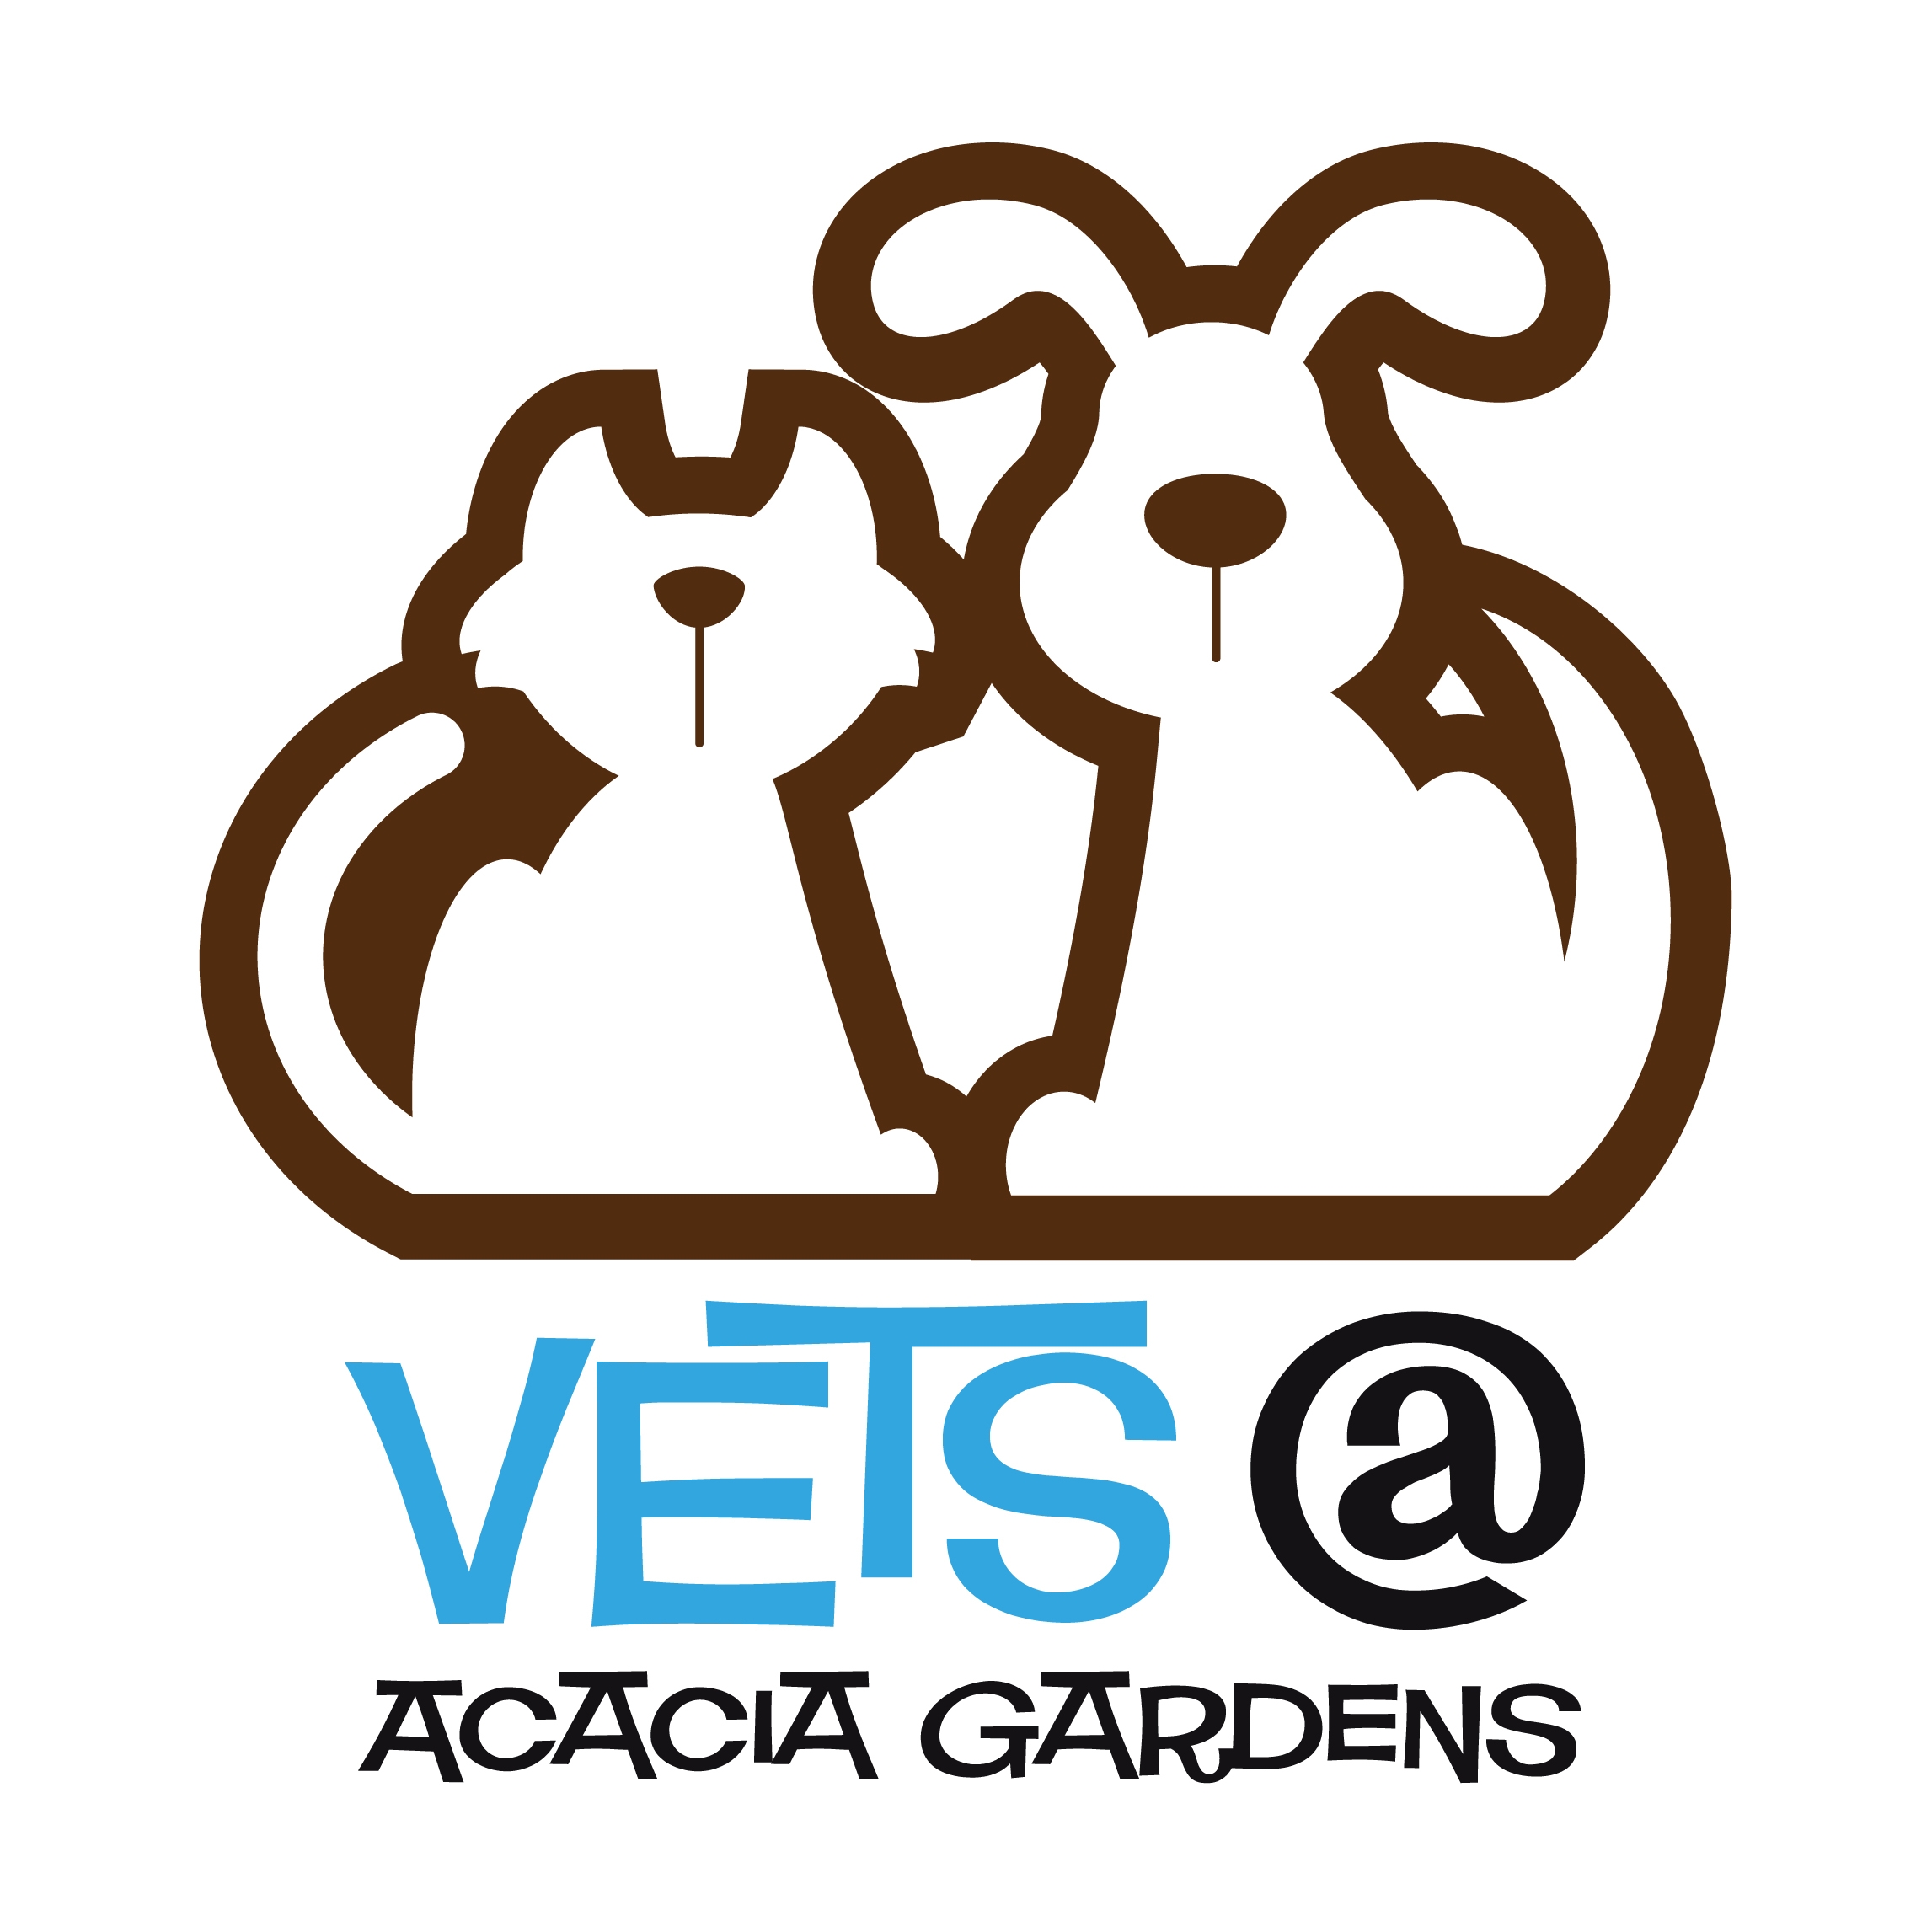 Vets @ Acacia Gardens